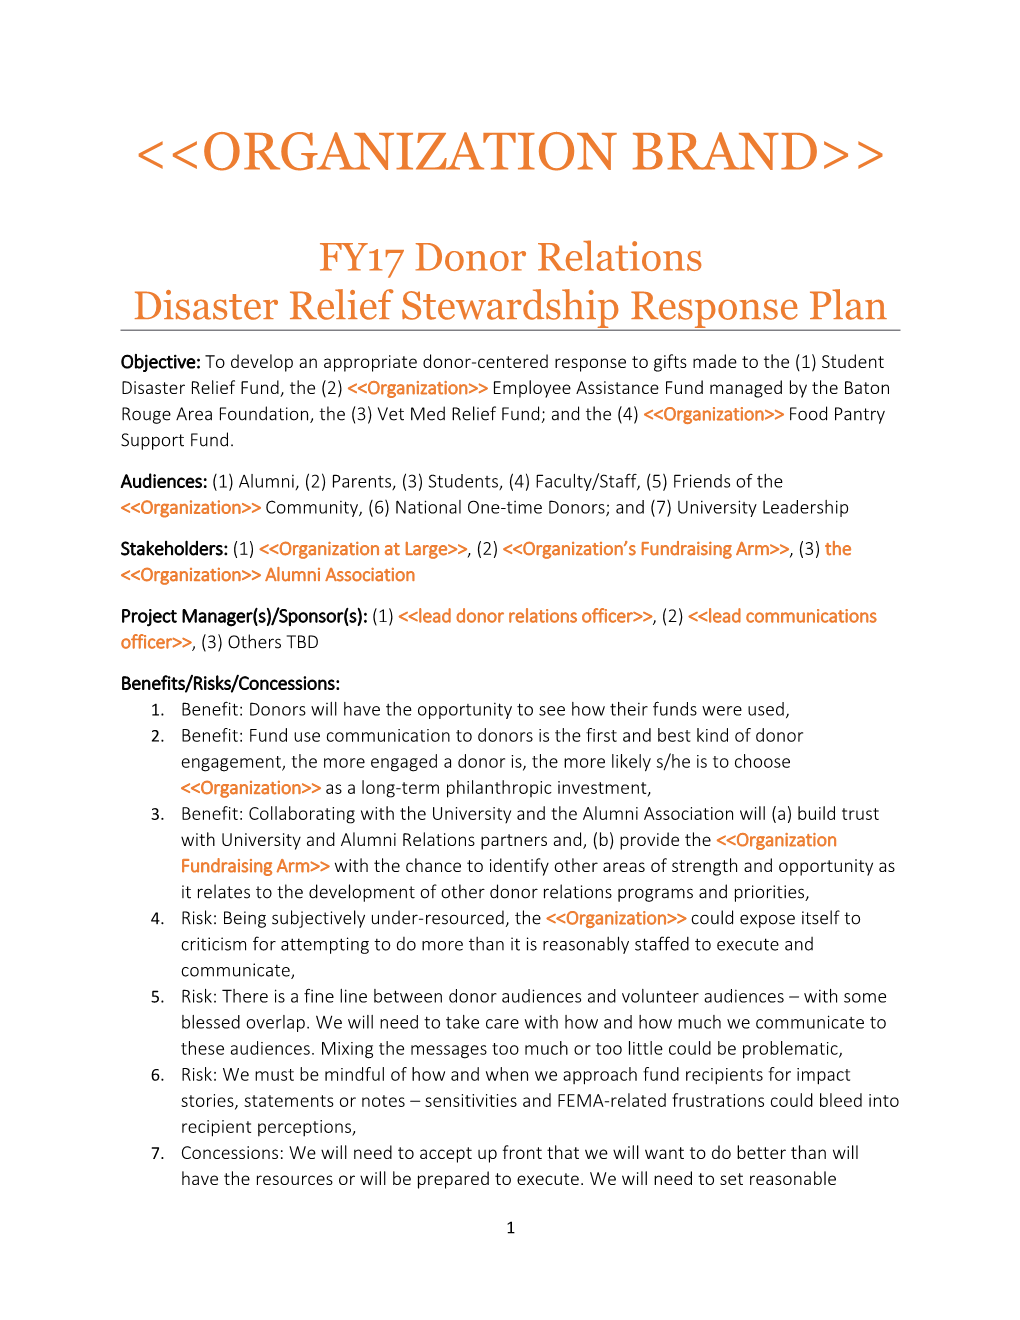 Disaster Relief Stewardship Response Plan